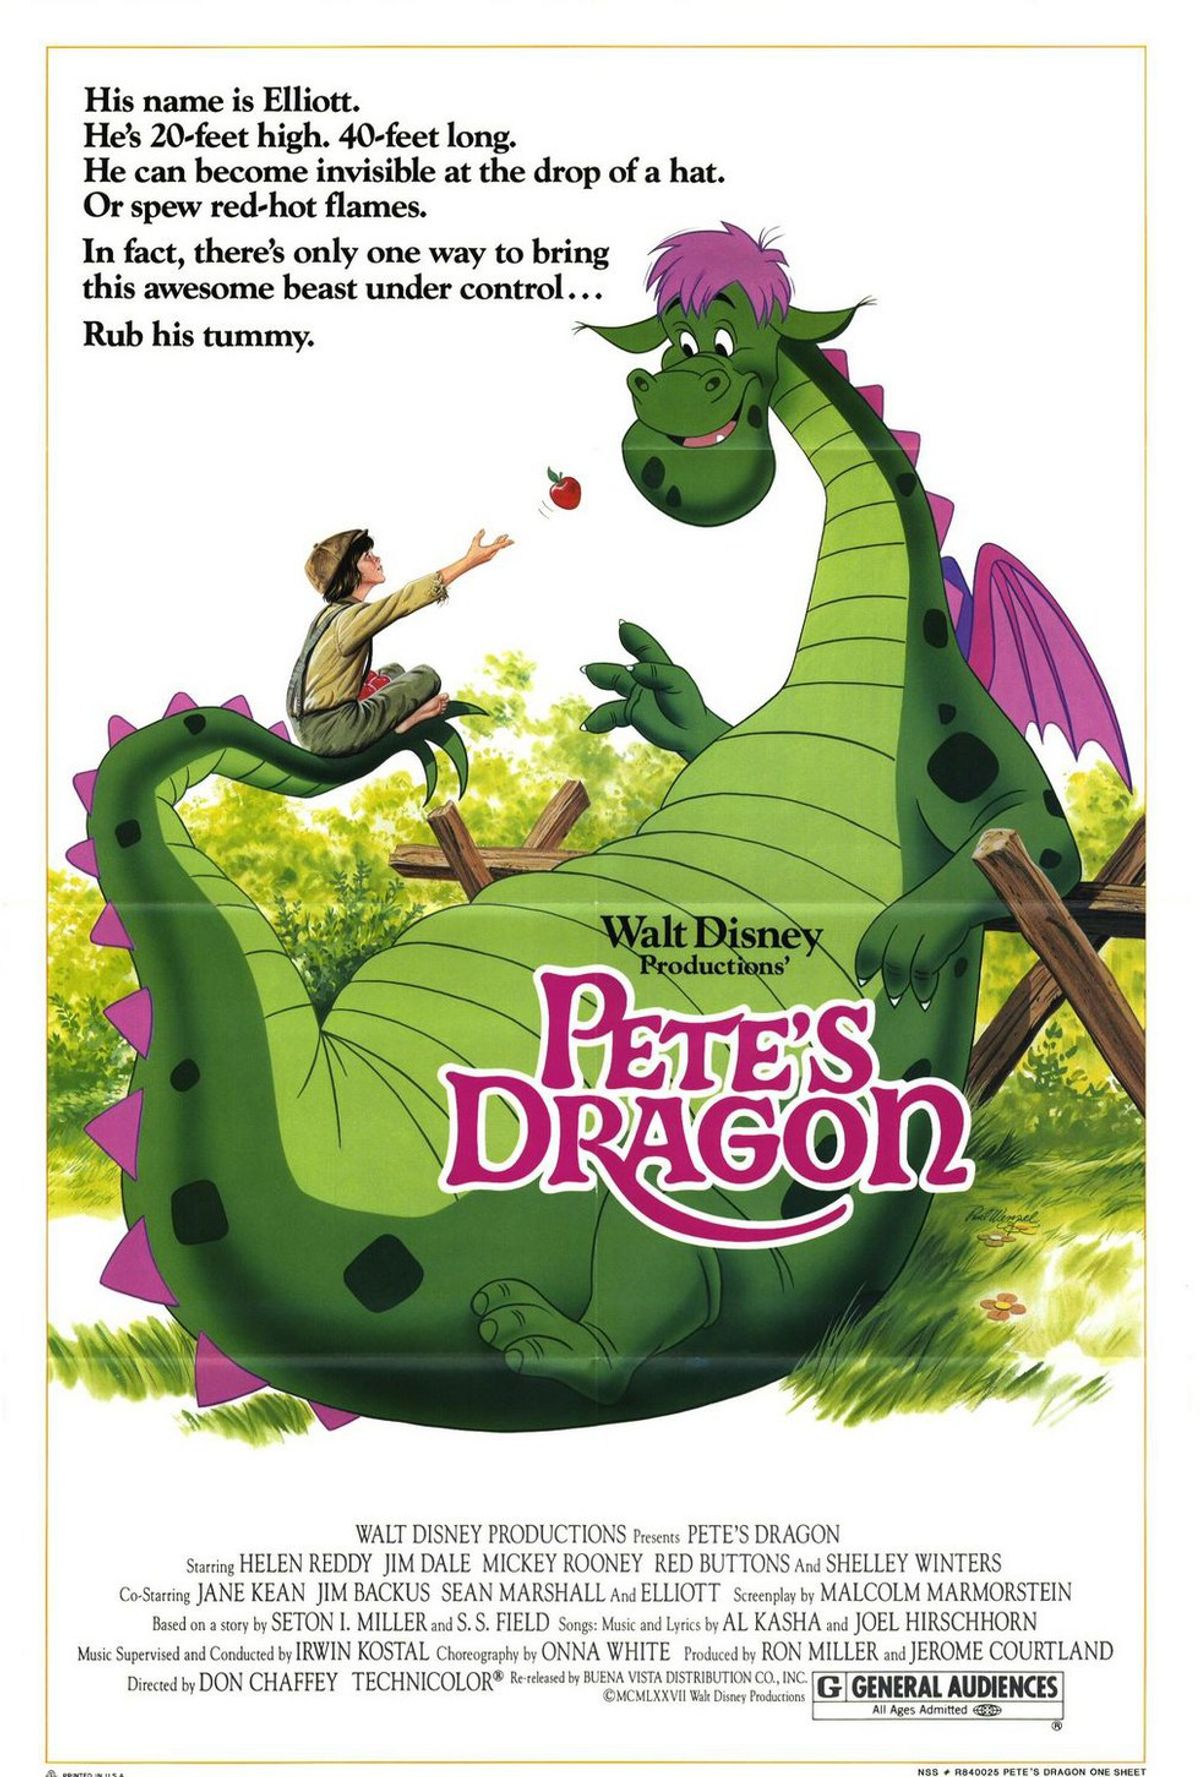 Retro Film Review: 'Pete's Dragon'